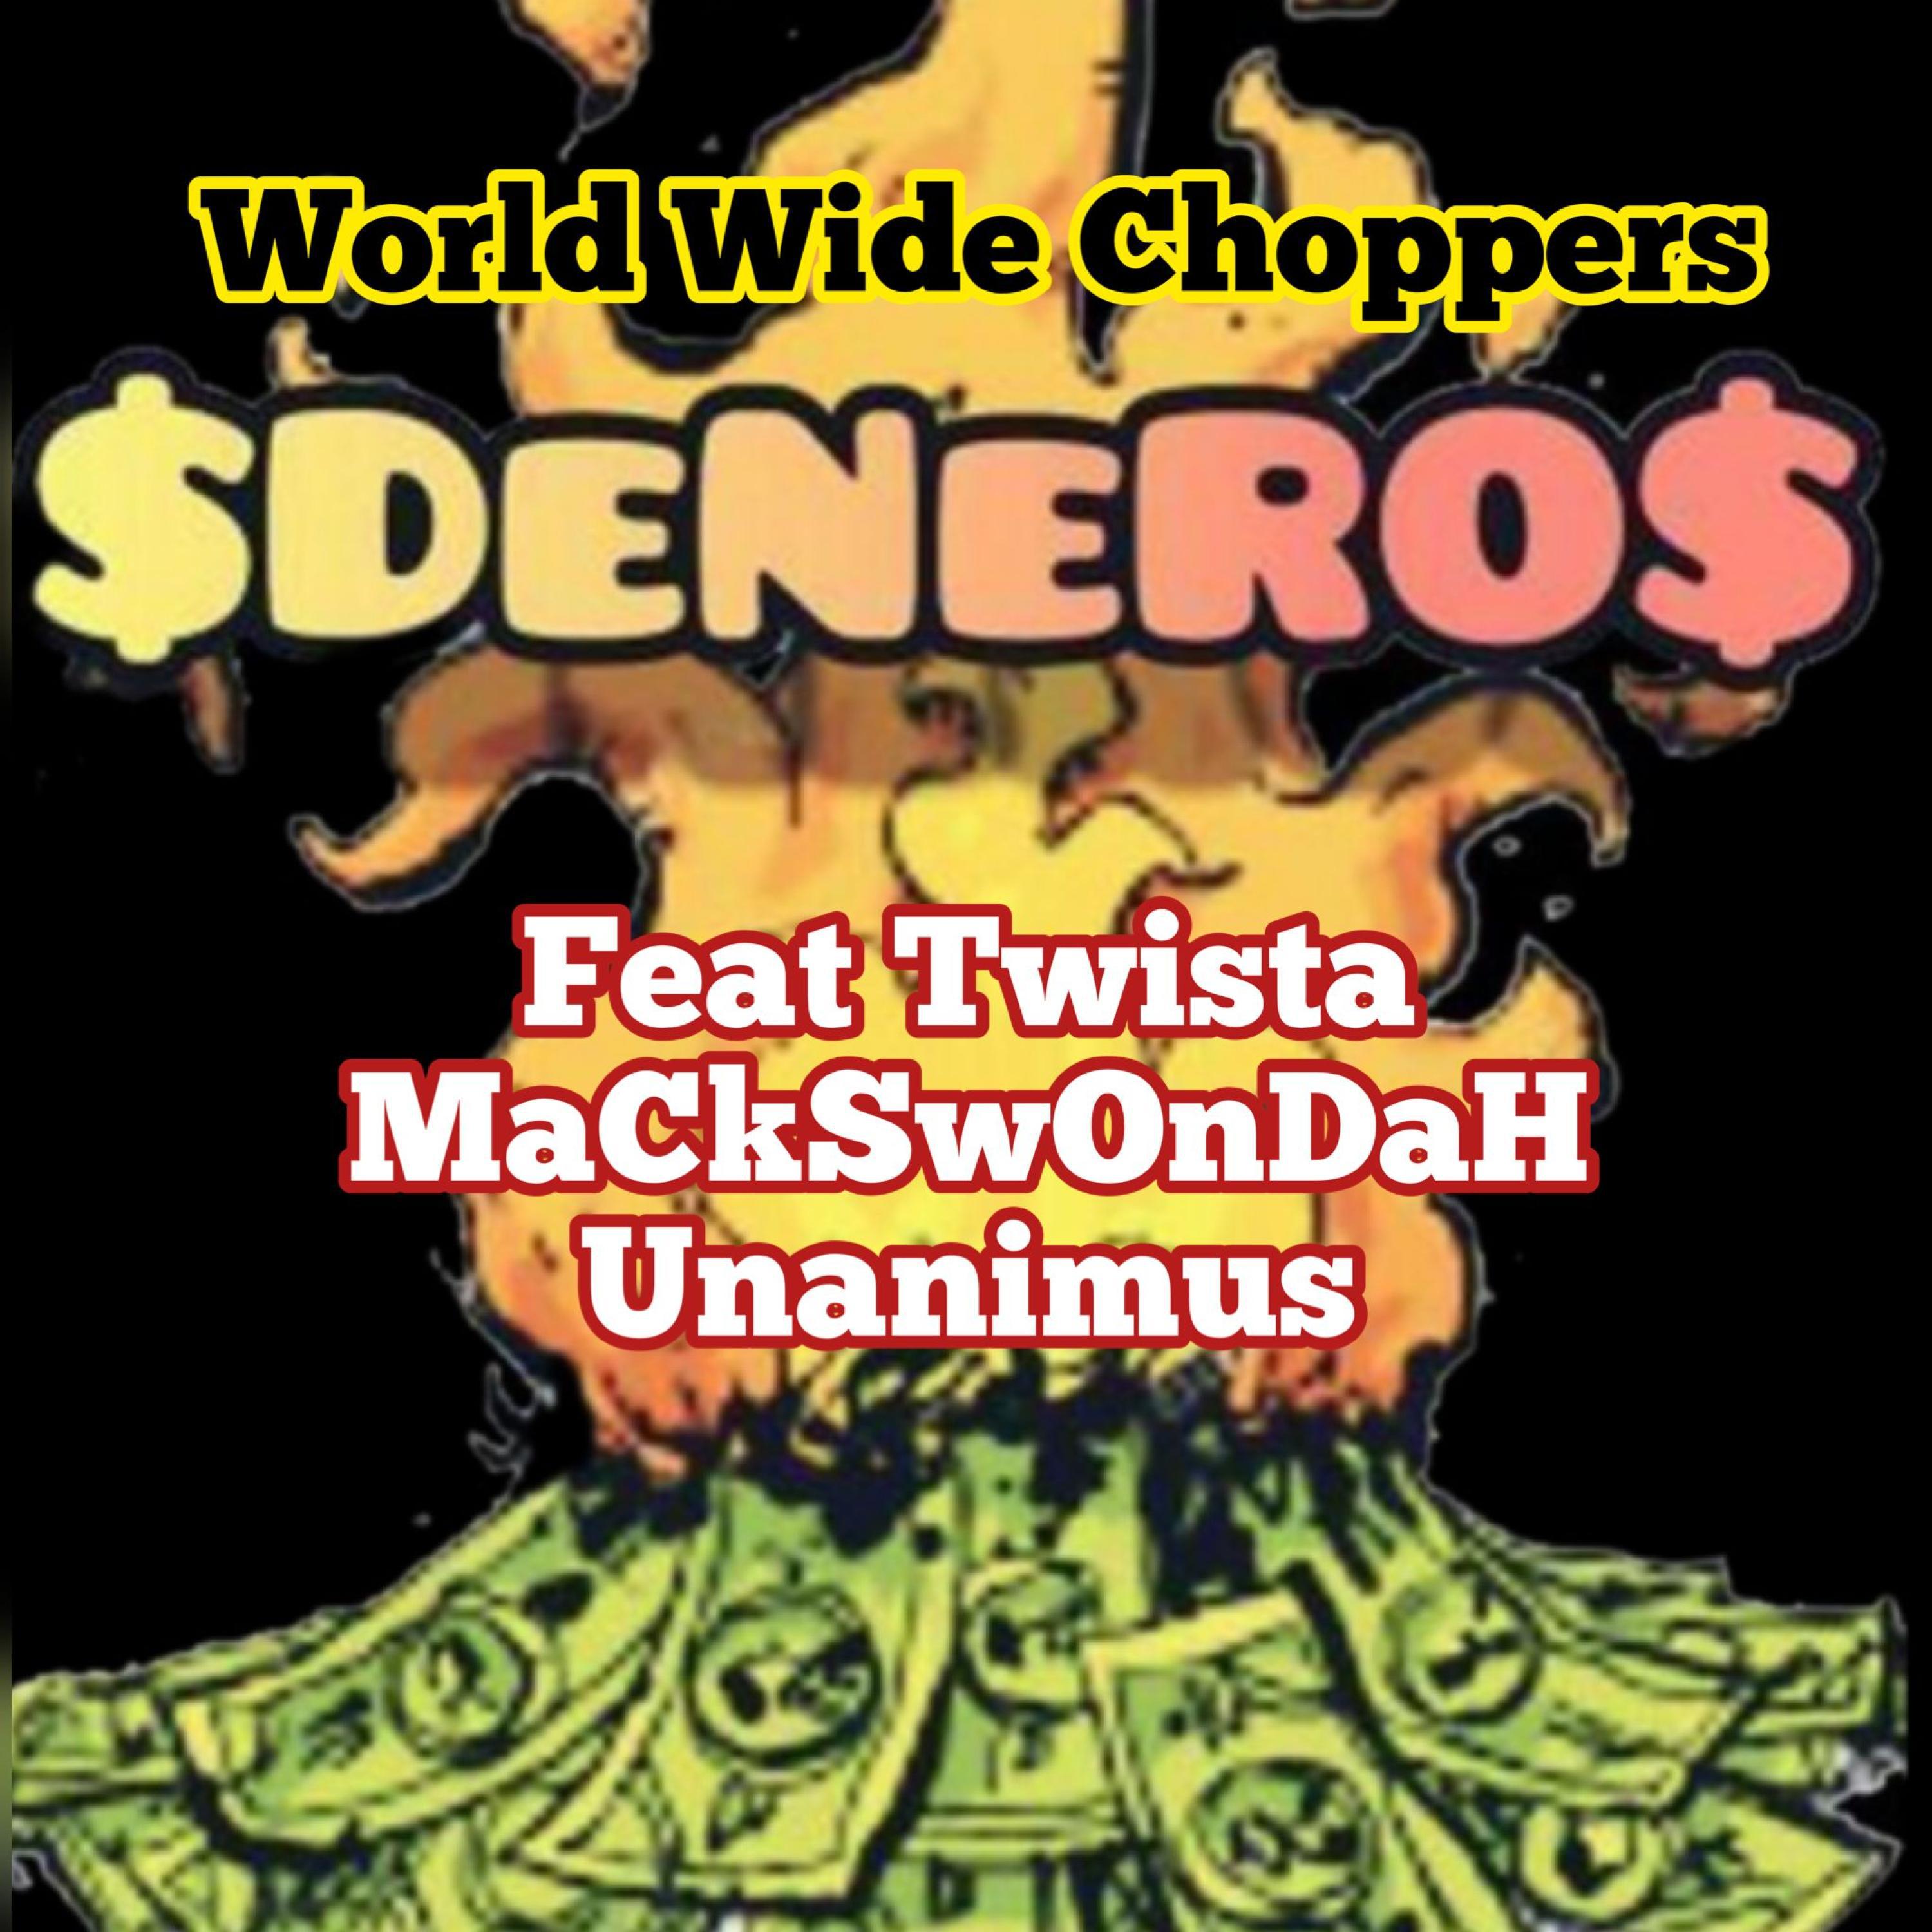 $denero$ - Worlwide Choppers (feat. TwistA, Macks Wondah & Unanimous)